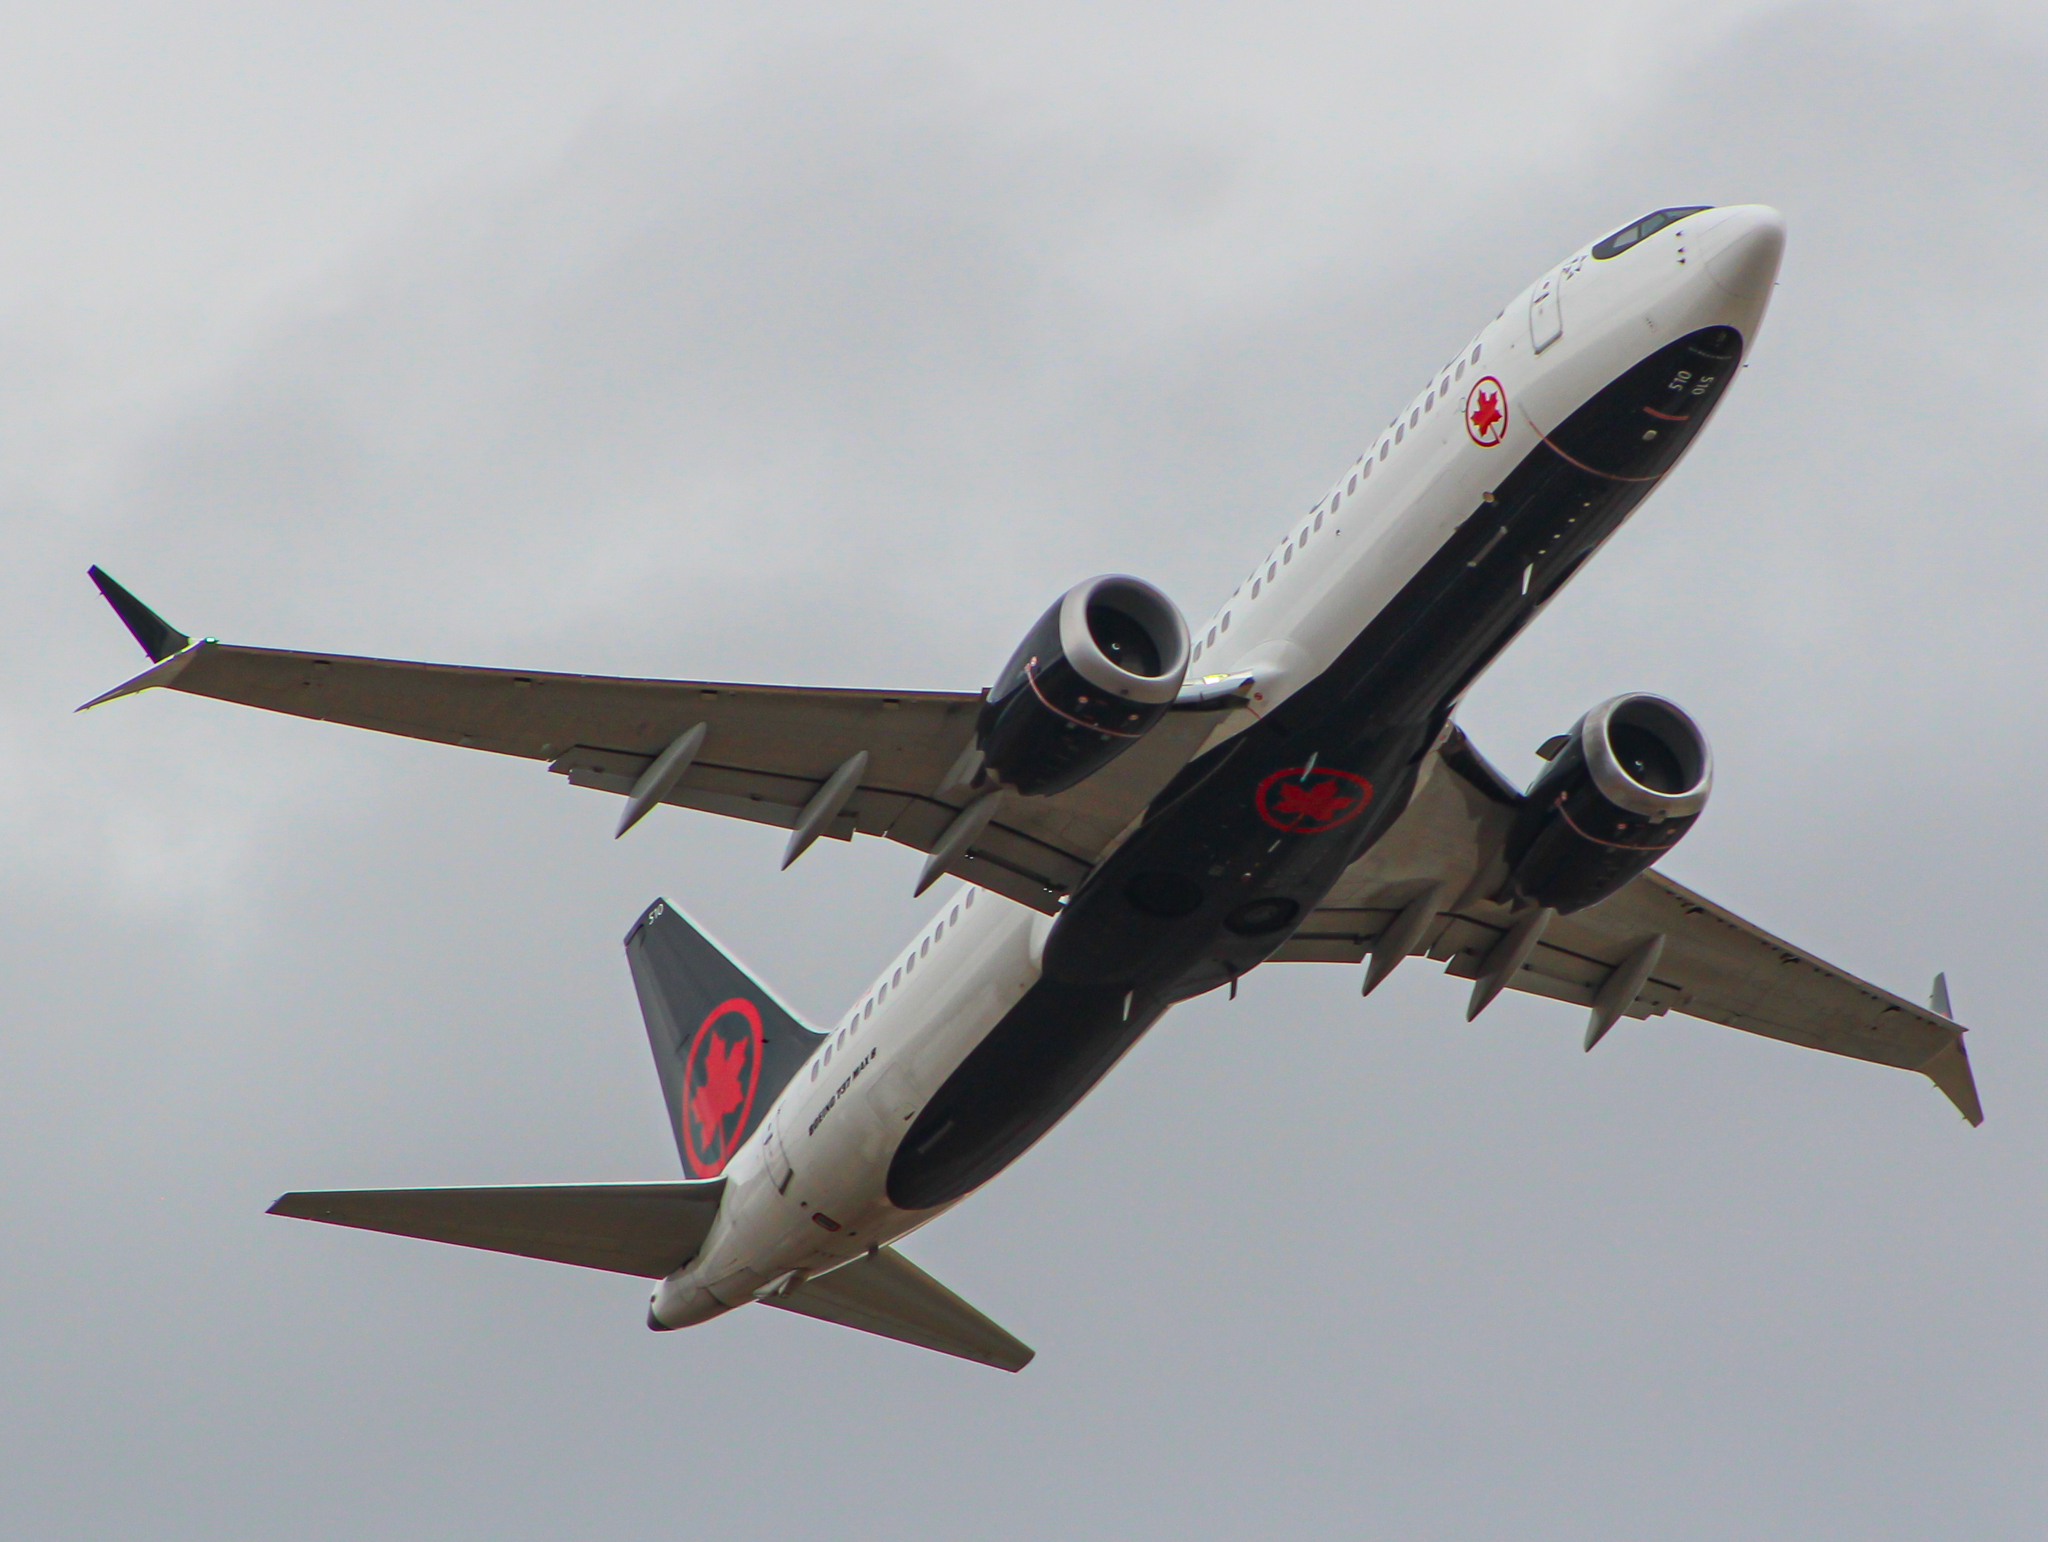 Air Canada To Operate Calgary-Honolulu Route